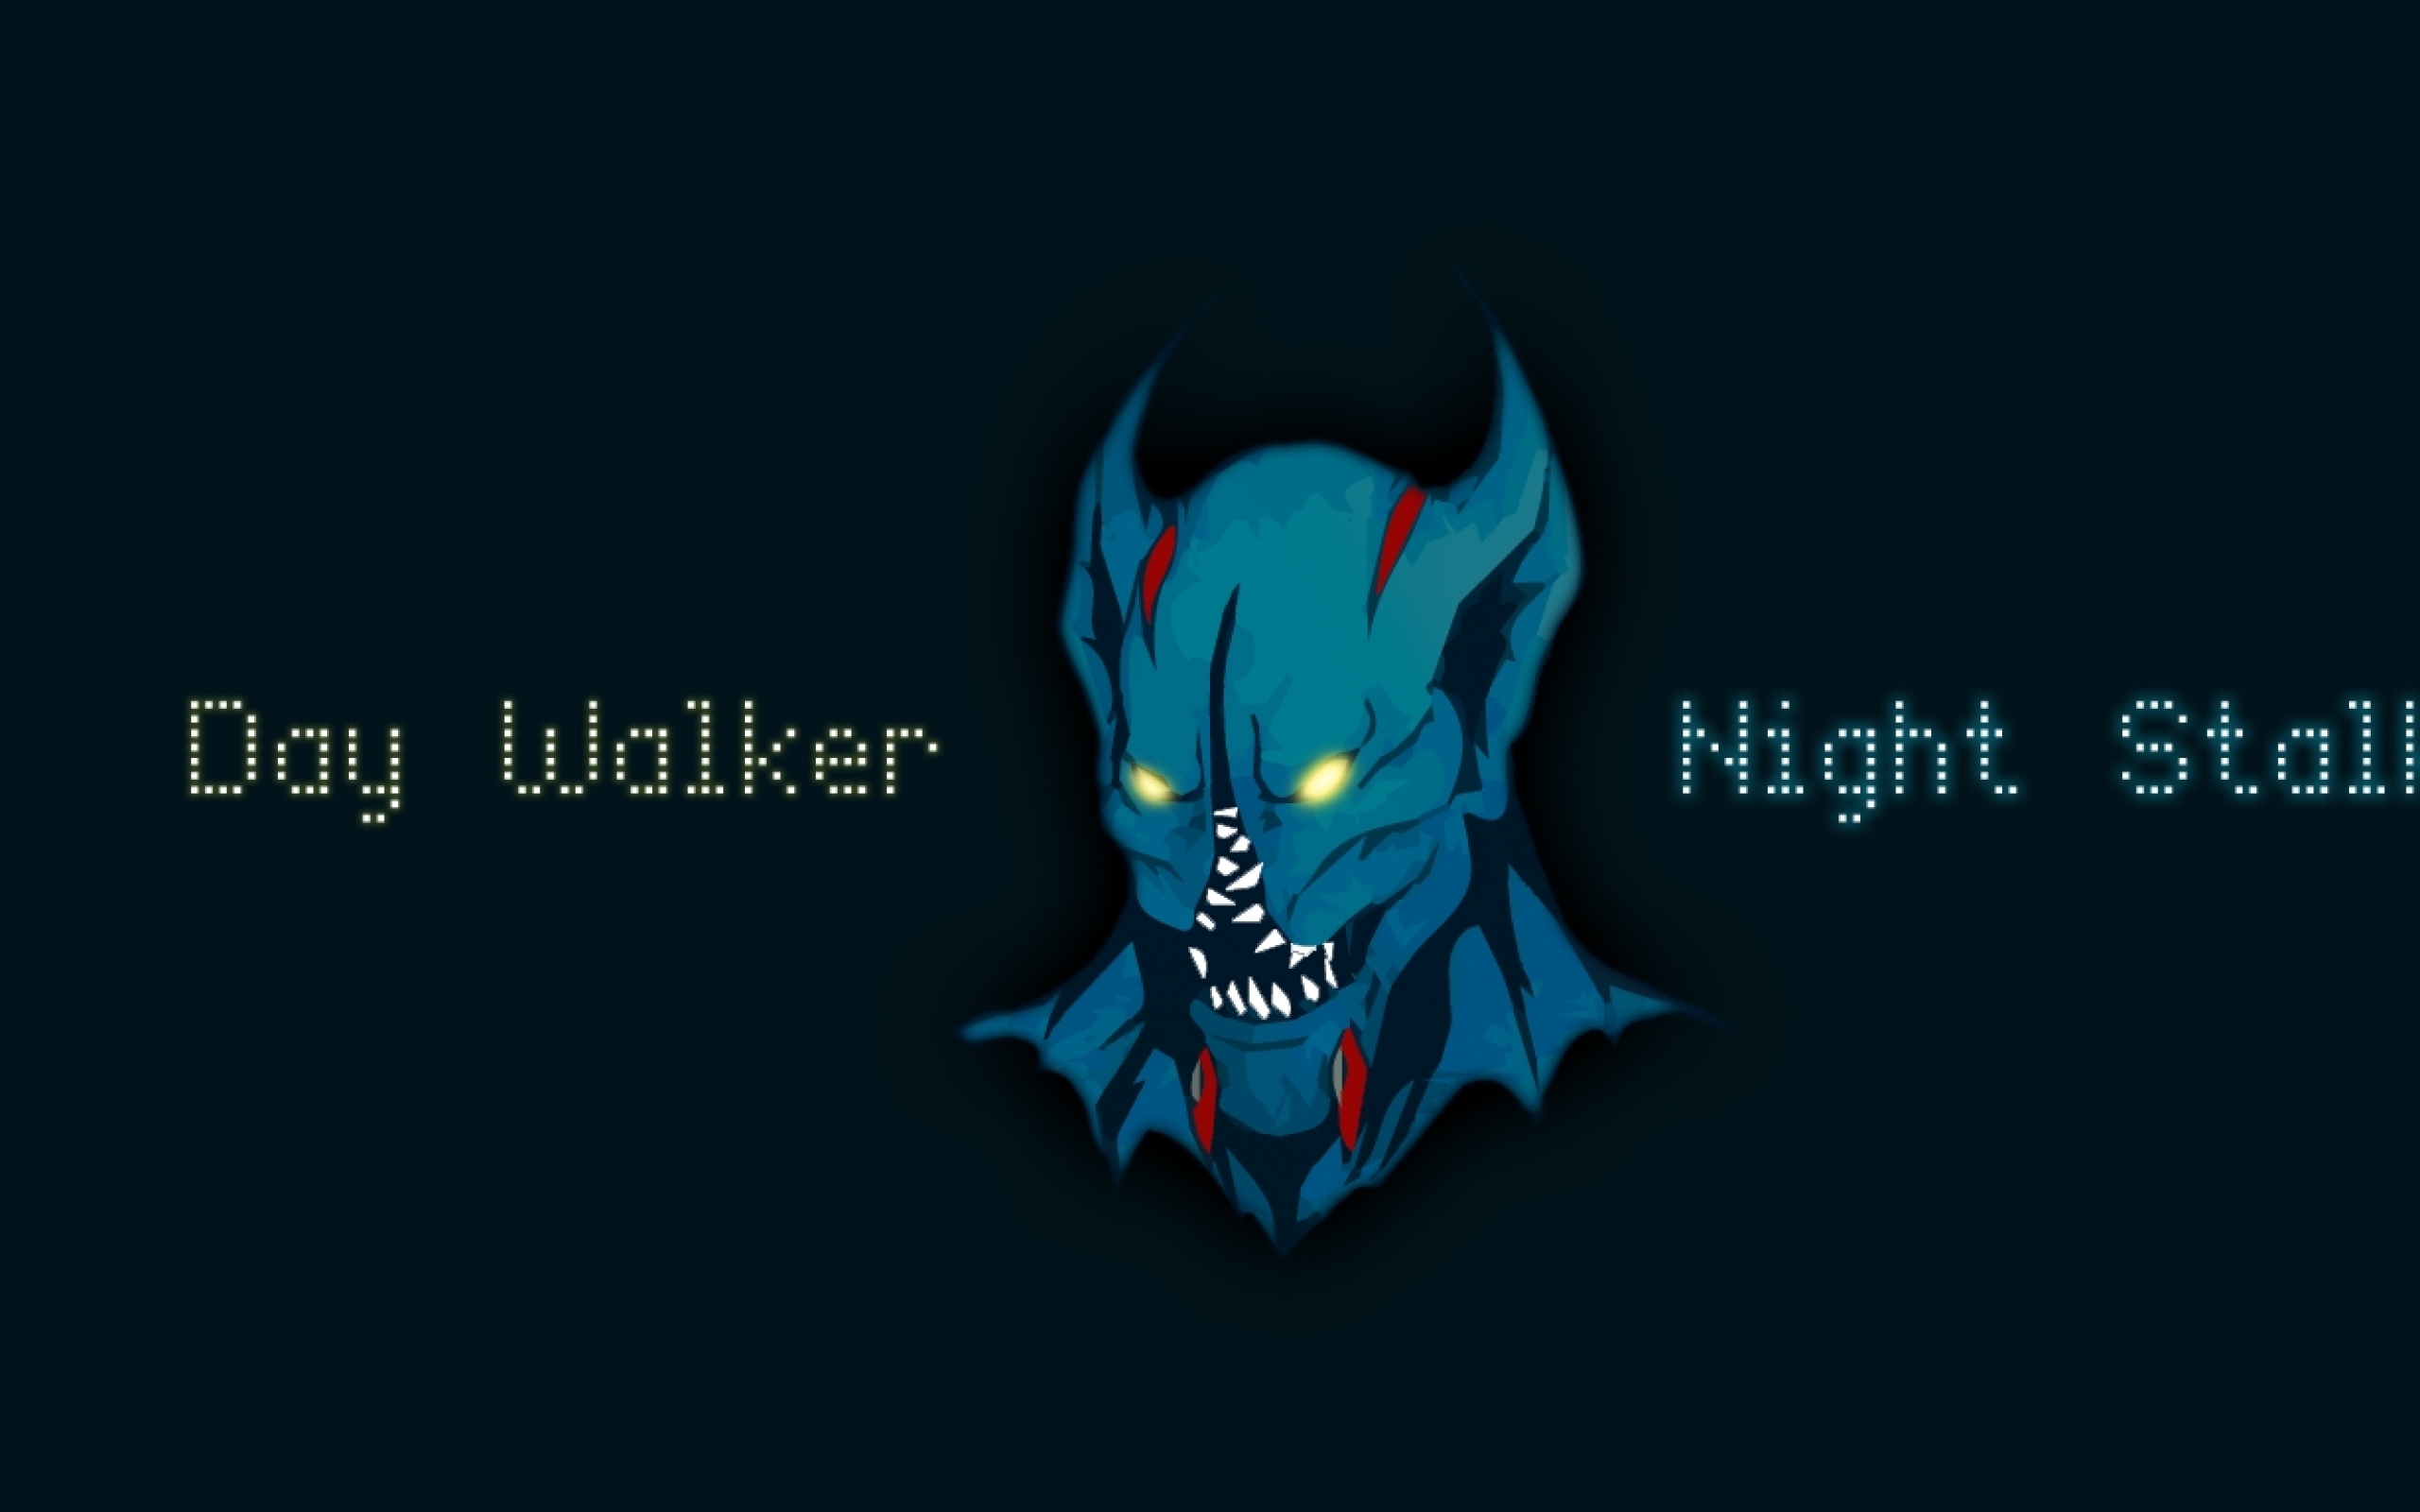  walker night stalker balanar 1366x768 wallpaper Wallpaper HD download